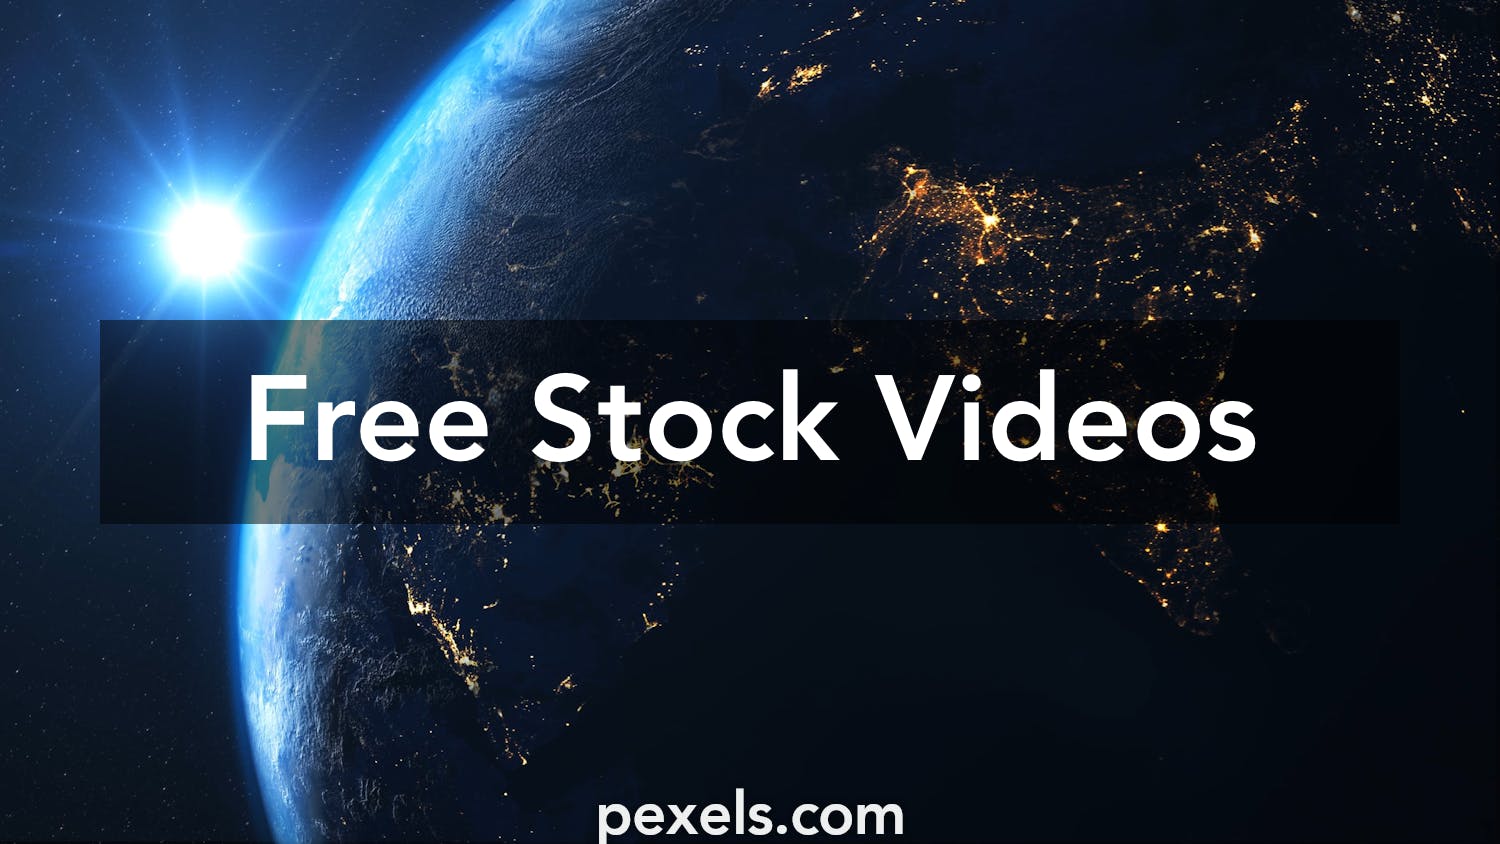 3d Animation Green Galaxy Nebula Shining Stock Footage Video (100